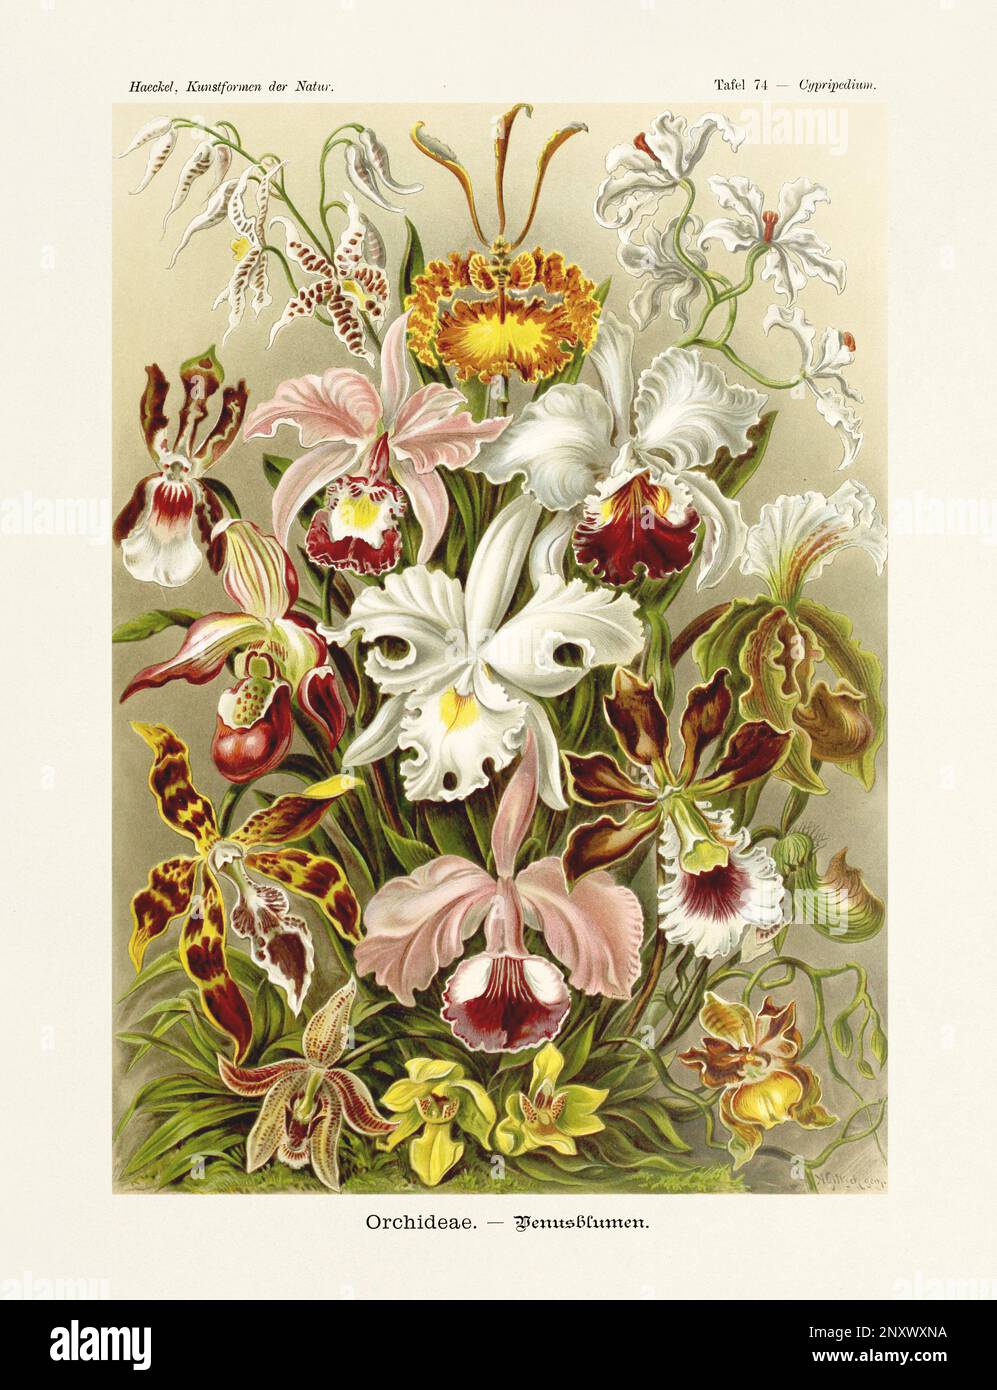 ERNST HAECKEL ART - Orchids - 19th Century - Antique Botanicall illustration - illustrations du livre : “Art Forms in nature” Banque D'Images